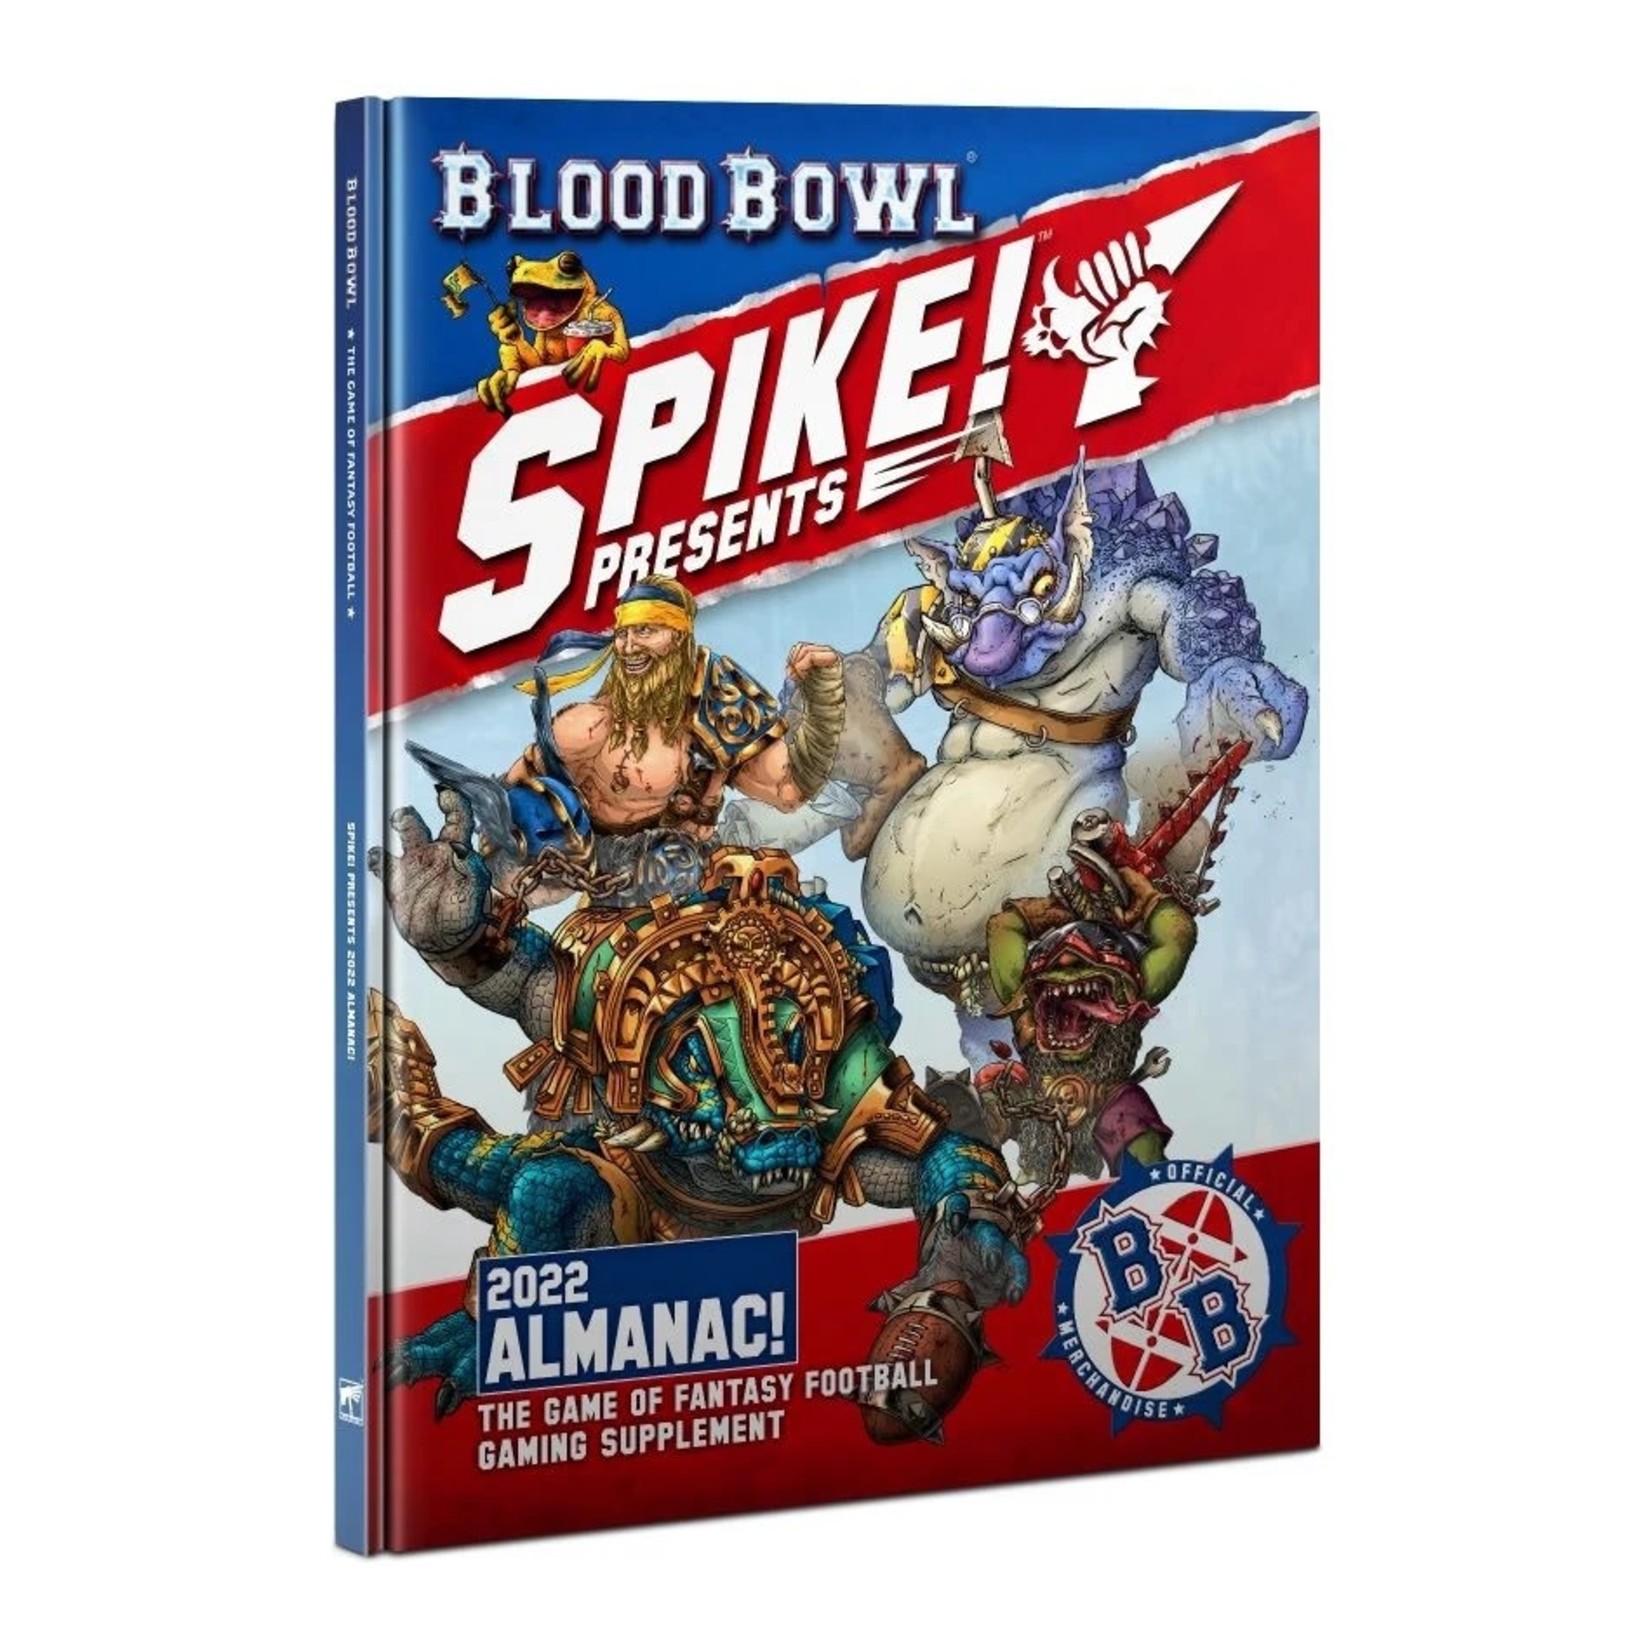 Blood Bowl Spike! 2022 Almanac